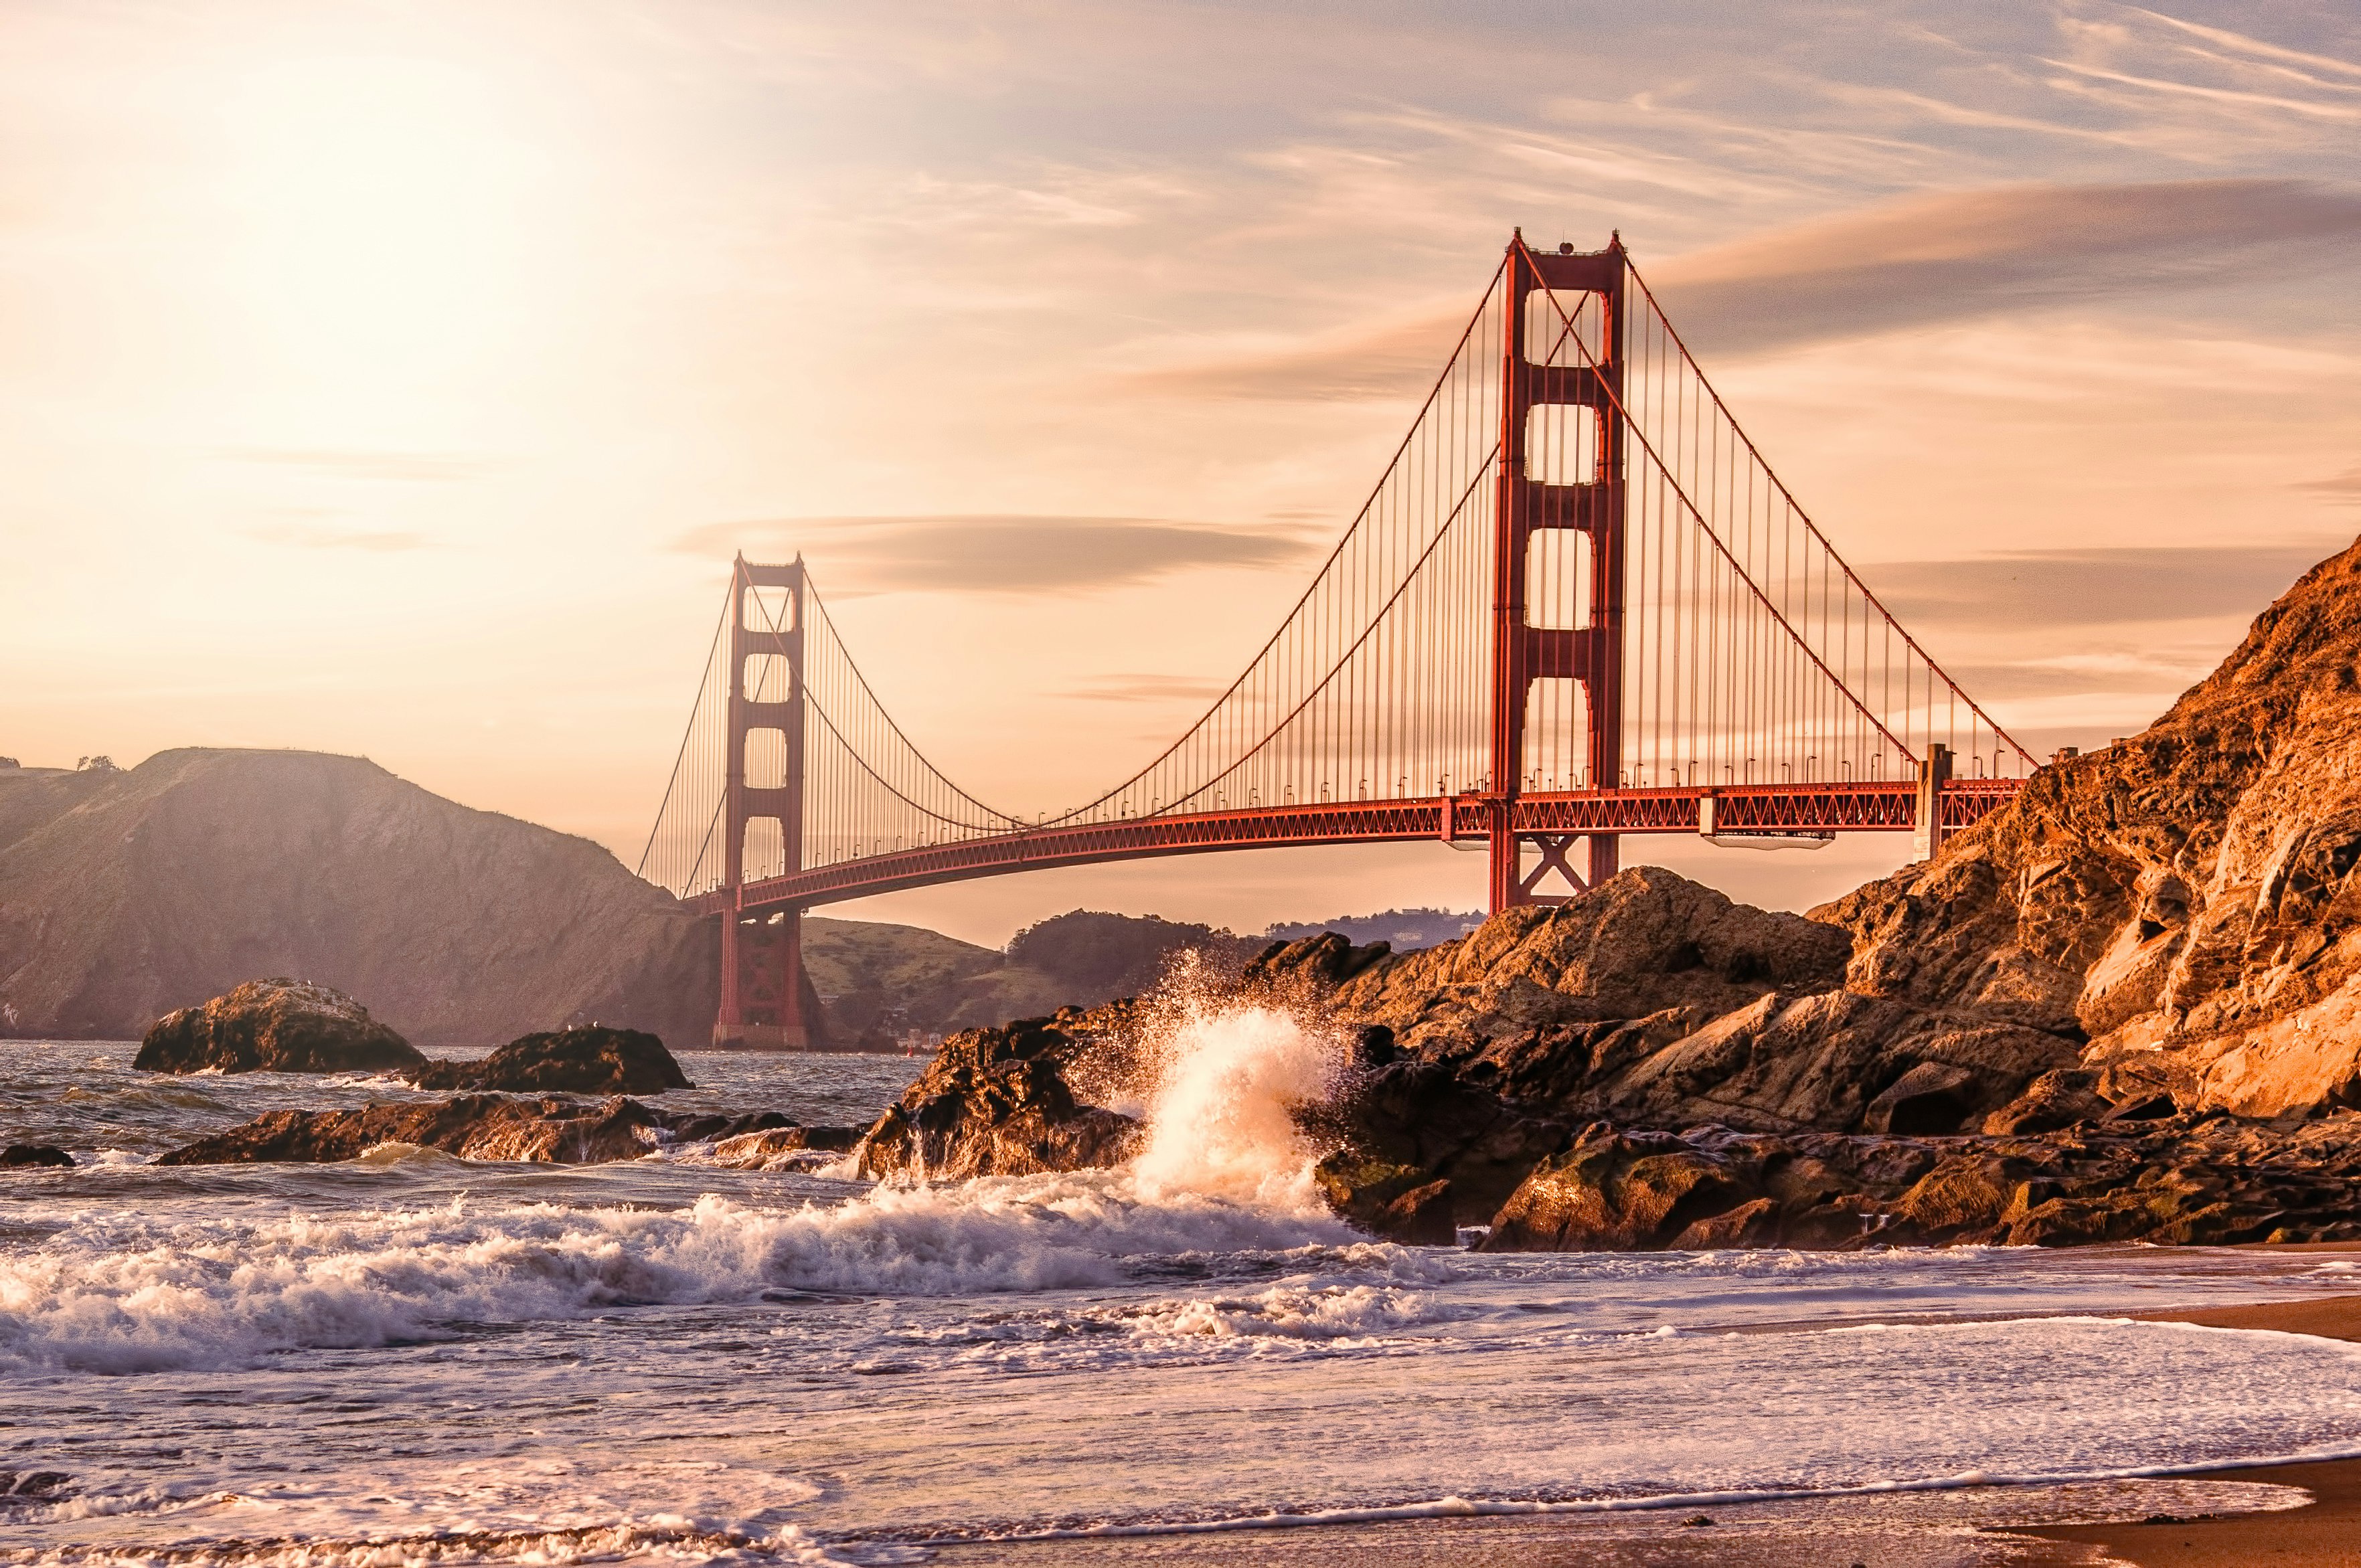 A shot of San Francisco's Golden Gate bridge at sunset